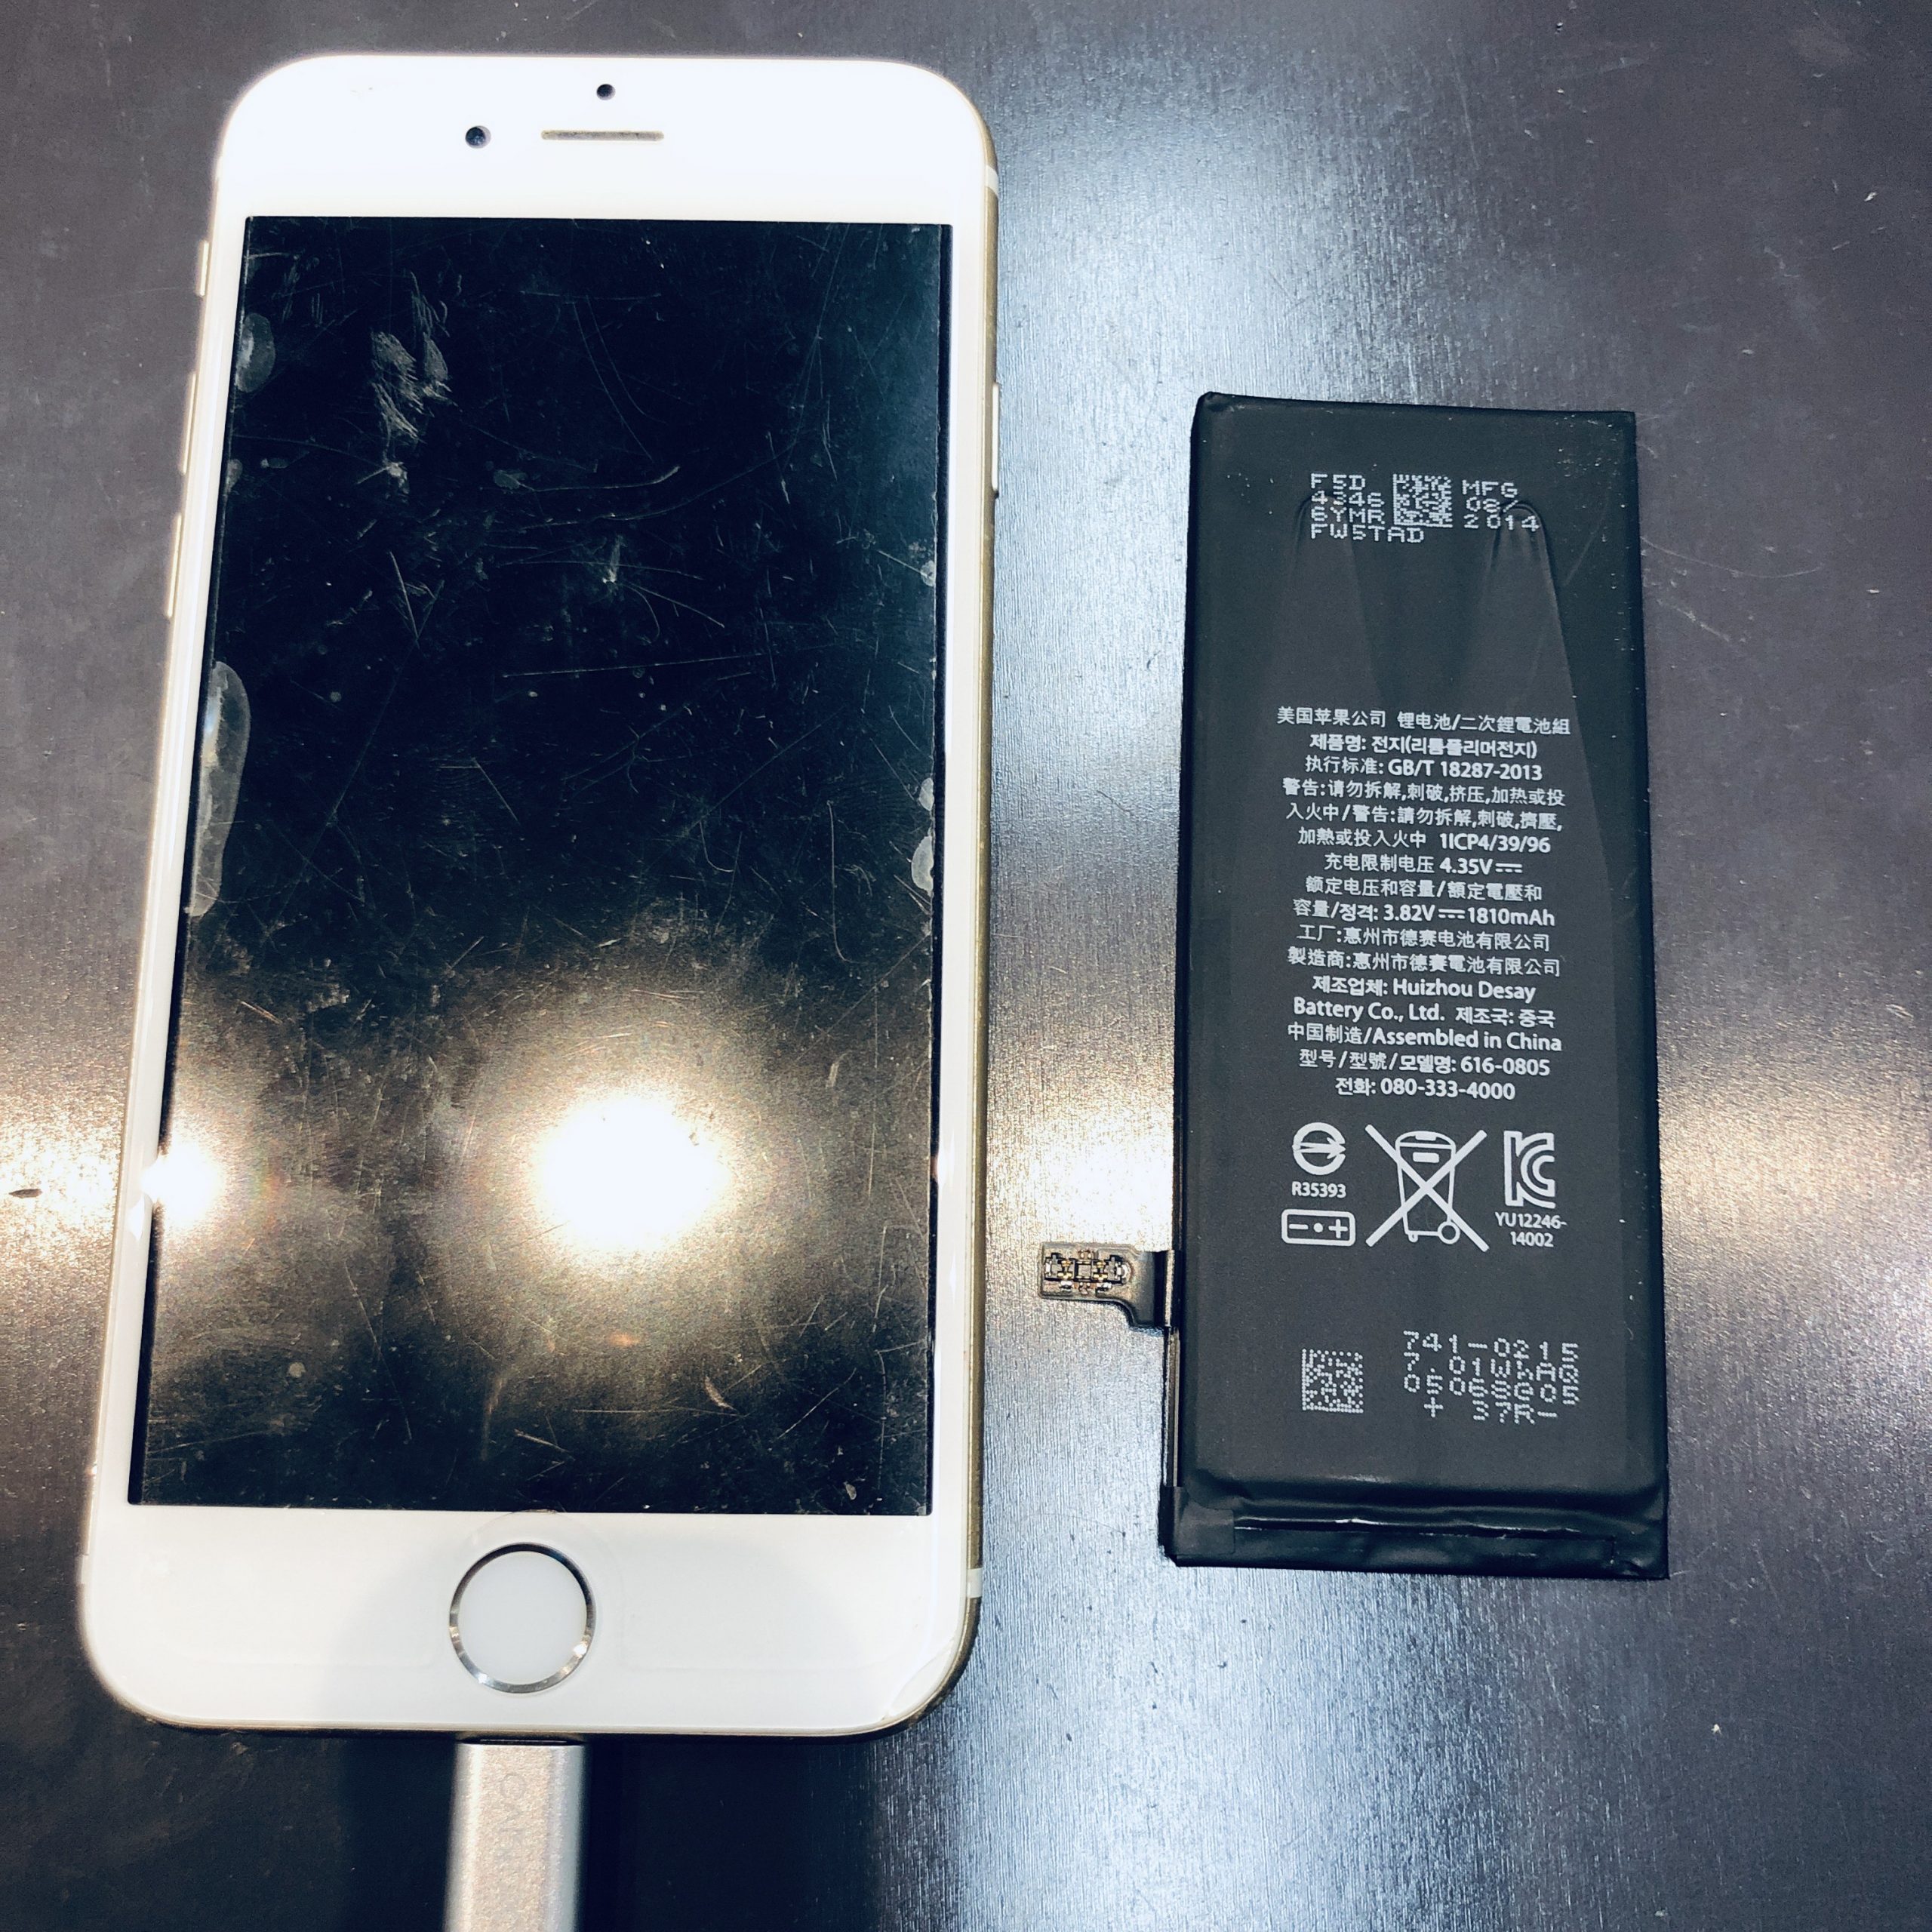 【 iPhone 6 】武雄市よりバッテリー交換にご来店